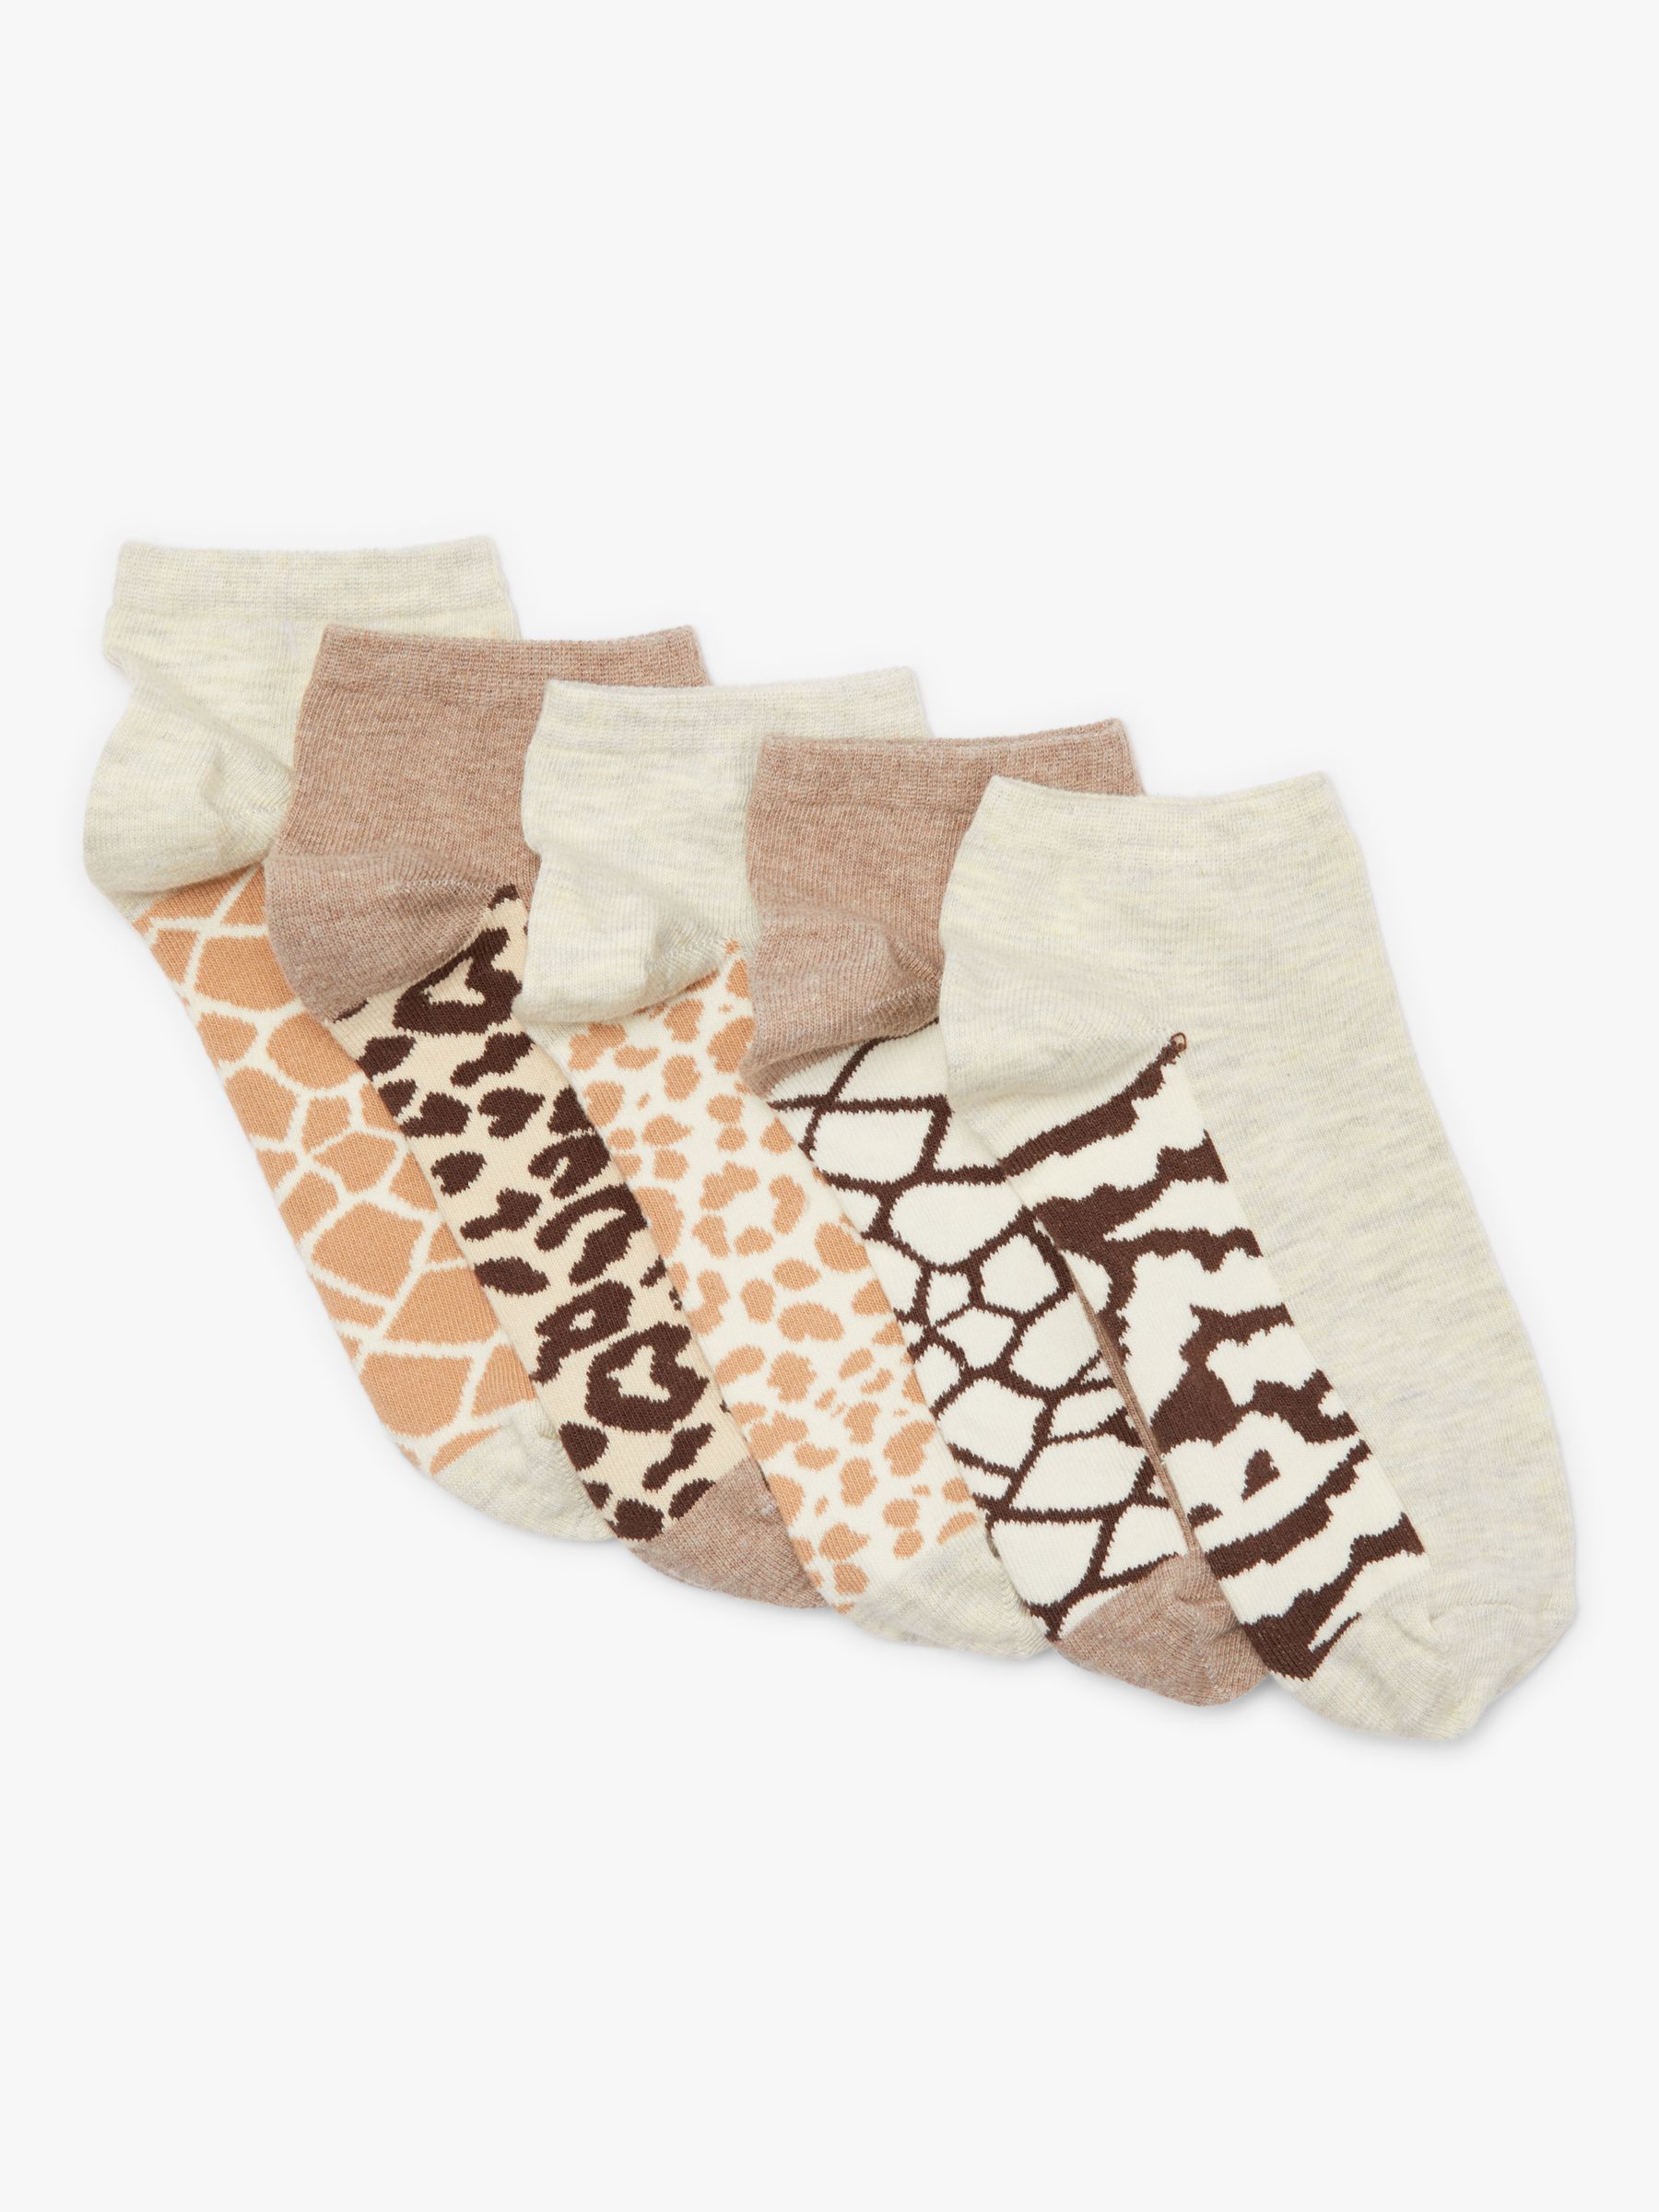 John Lewis & Partners Animal Print Trainer Socks, Pack of 5, Multi